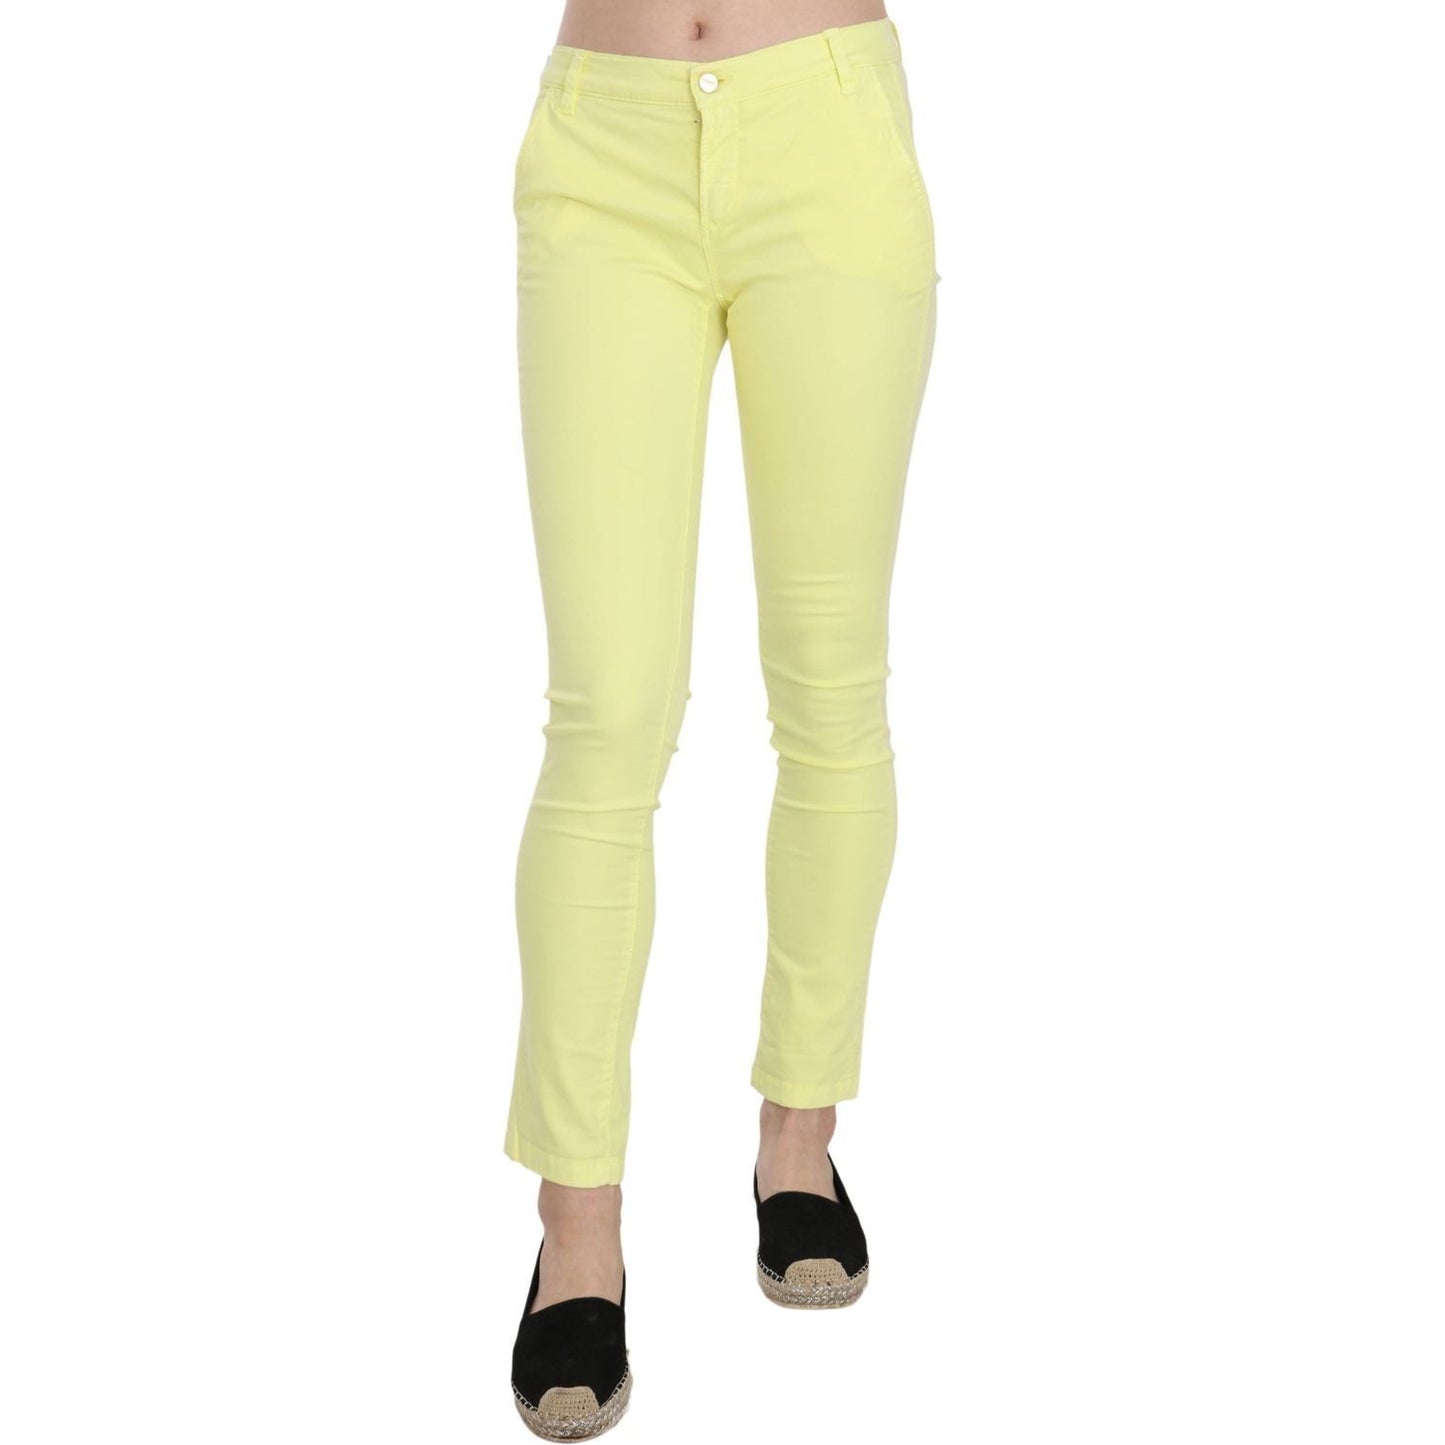 PINKO Chic Yellow Low Waist Skinny Casual Trousers yellow-cotton-stretch-low-waist-skinny-casual-trouser-pants IMG_0567-scaled.jpg